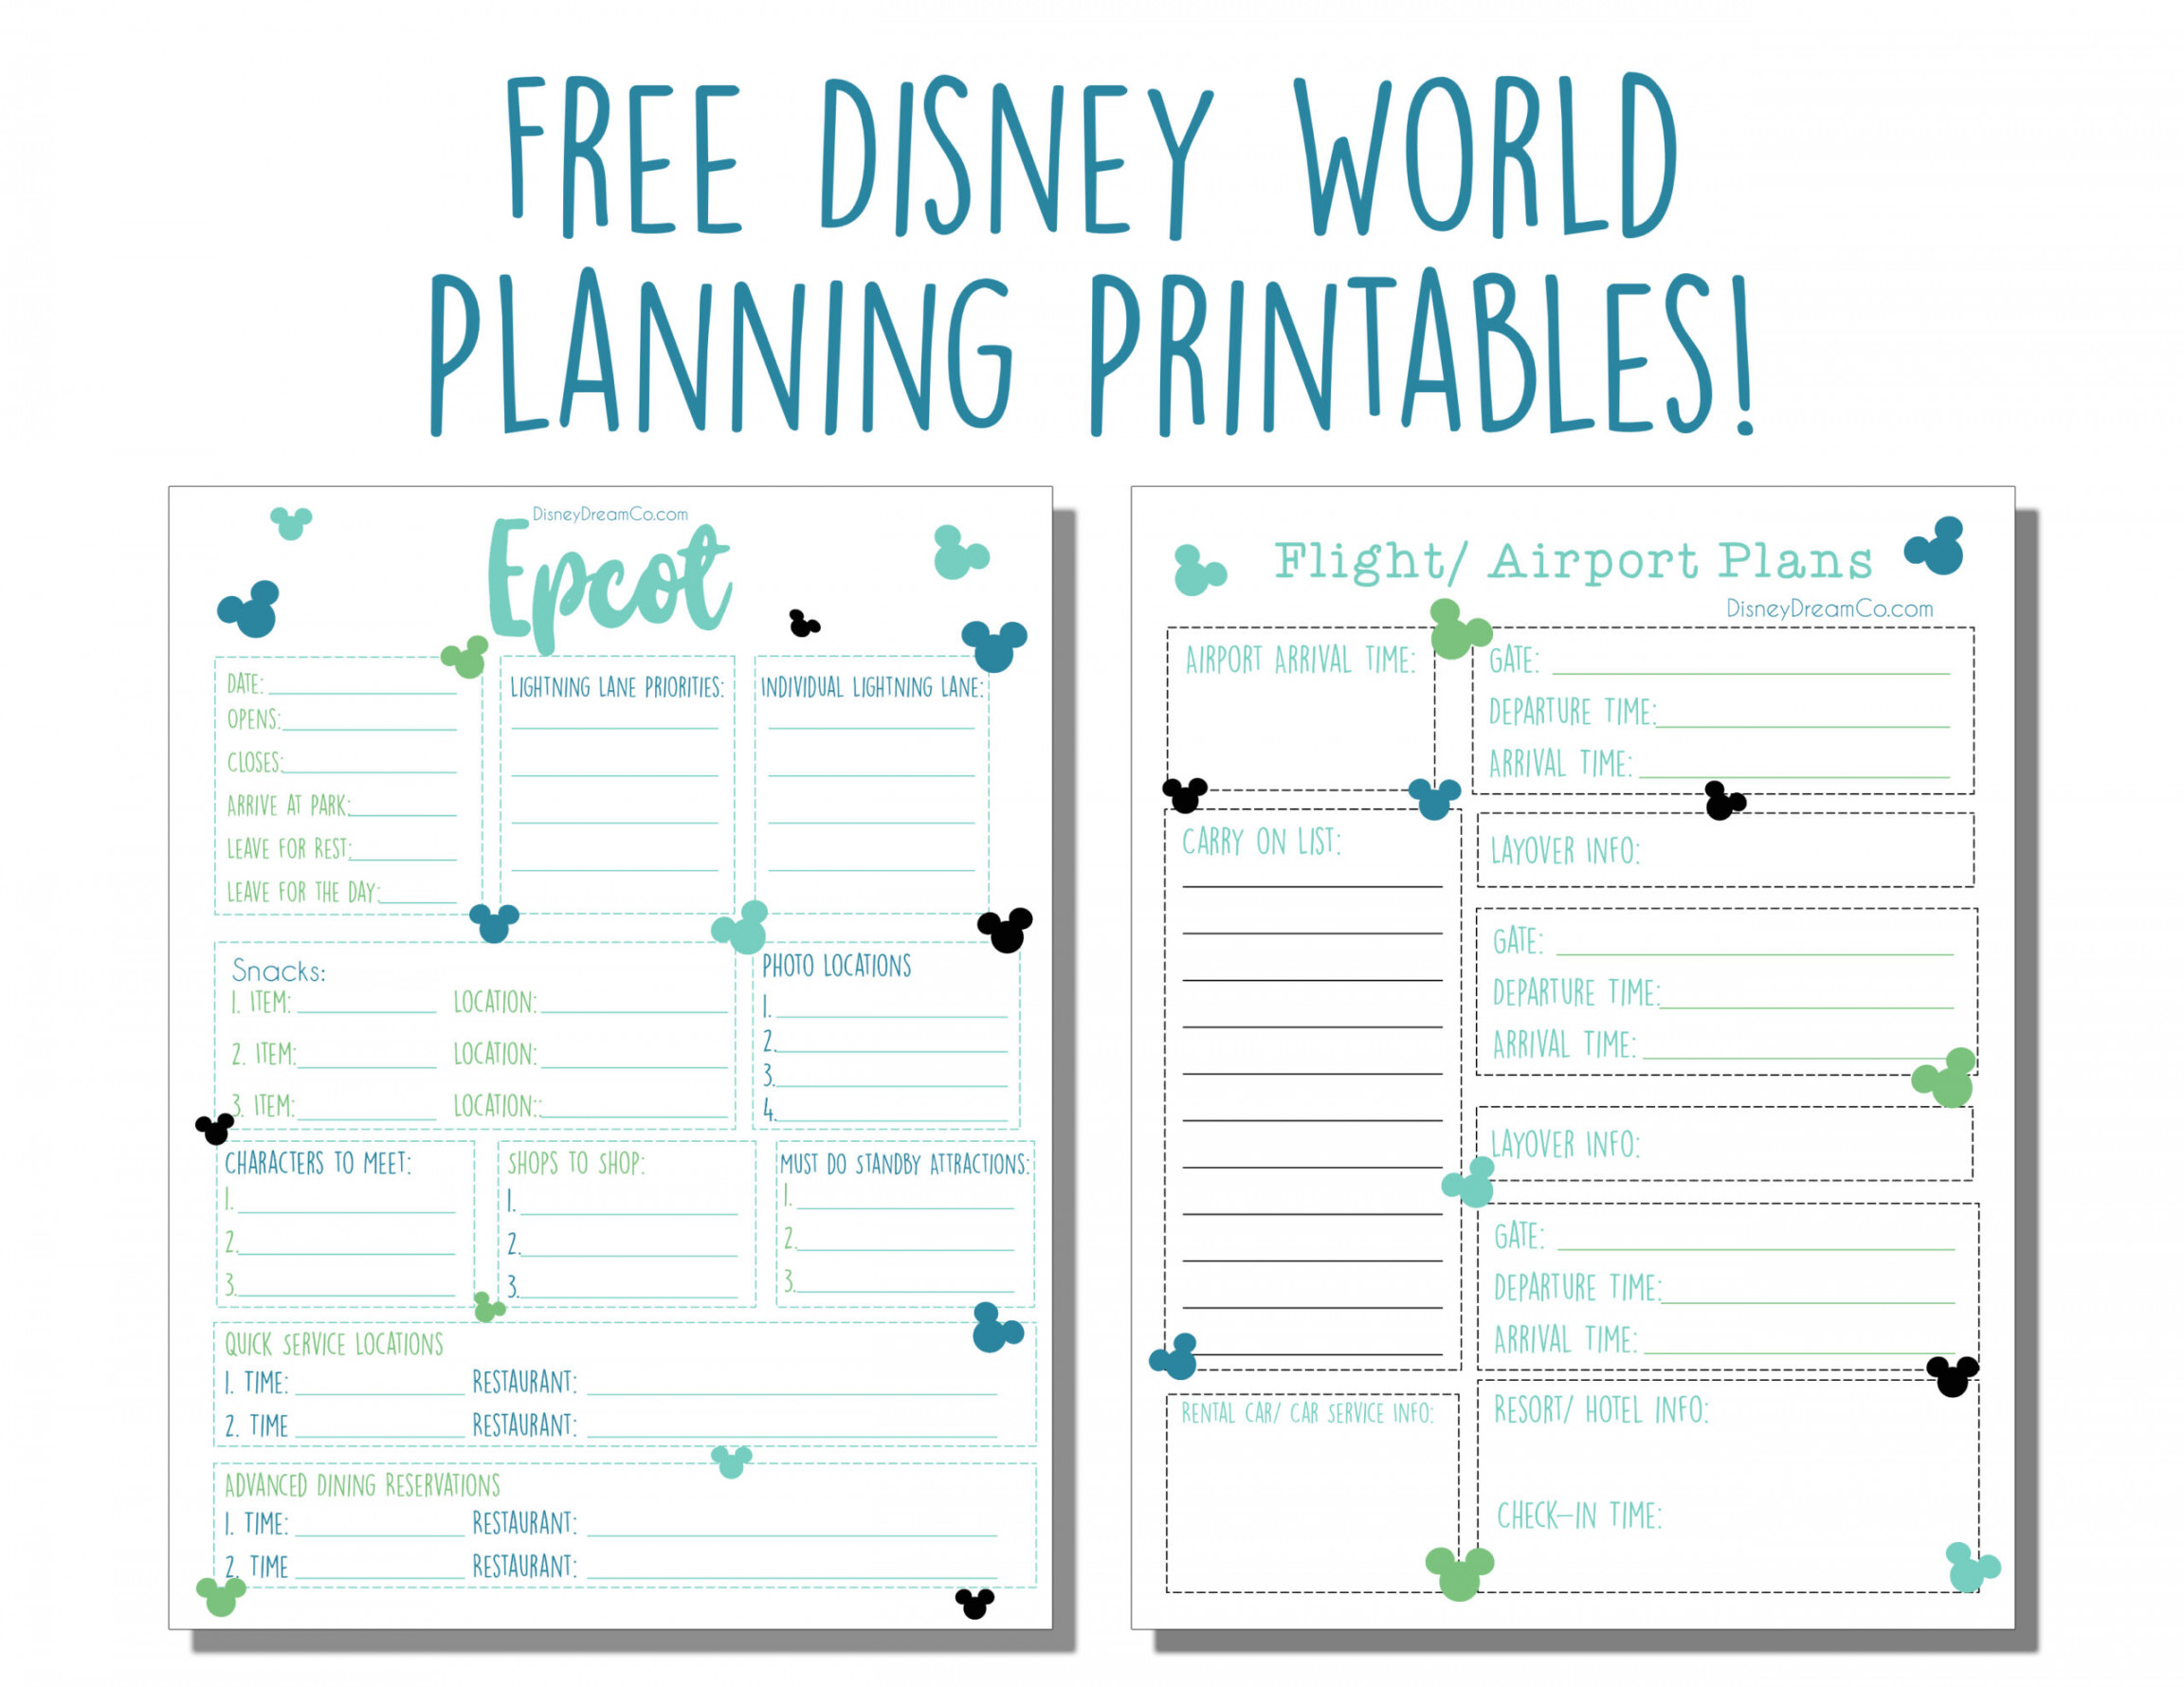 Disney World FREE Planning Printables: Disney World Planner